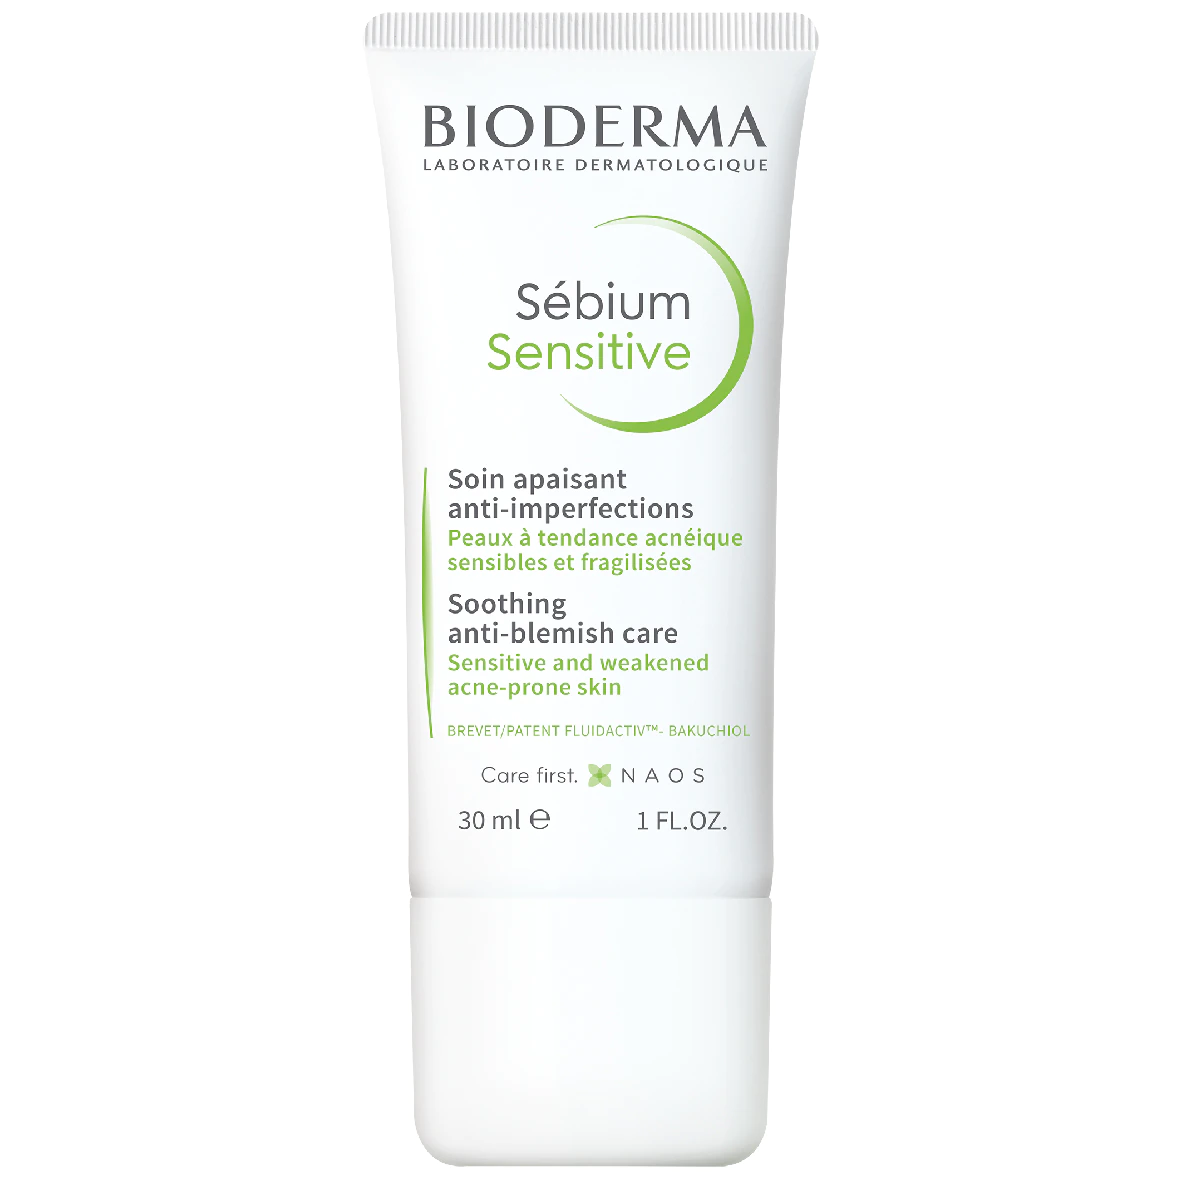 Ingrijire ten gras-acneic - Bioderma Sebium Sensitive pentru ten sensibilizat post tratamente acneice x 30ml, medik-on.ro